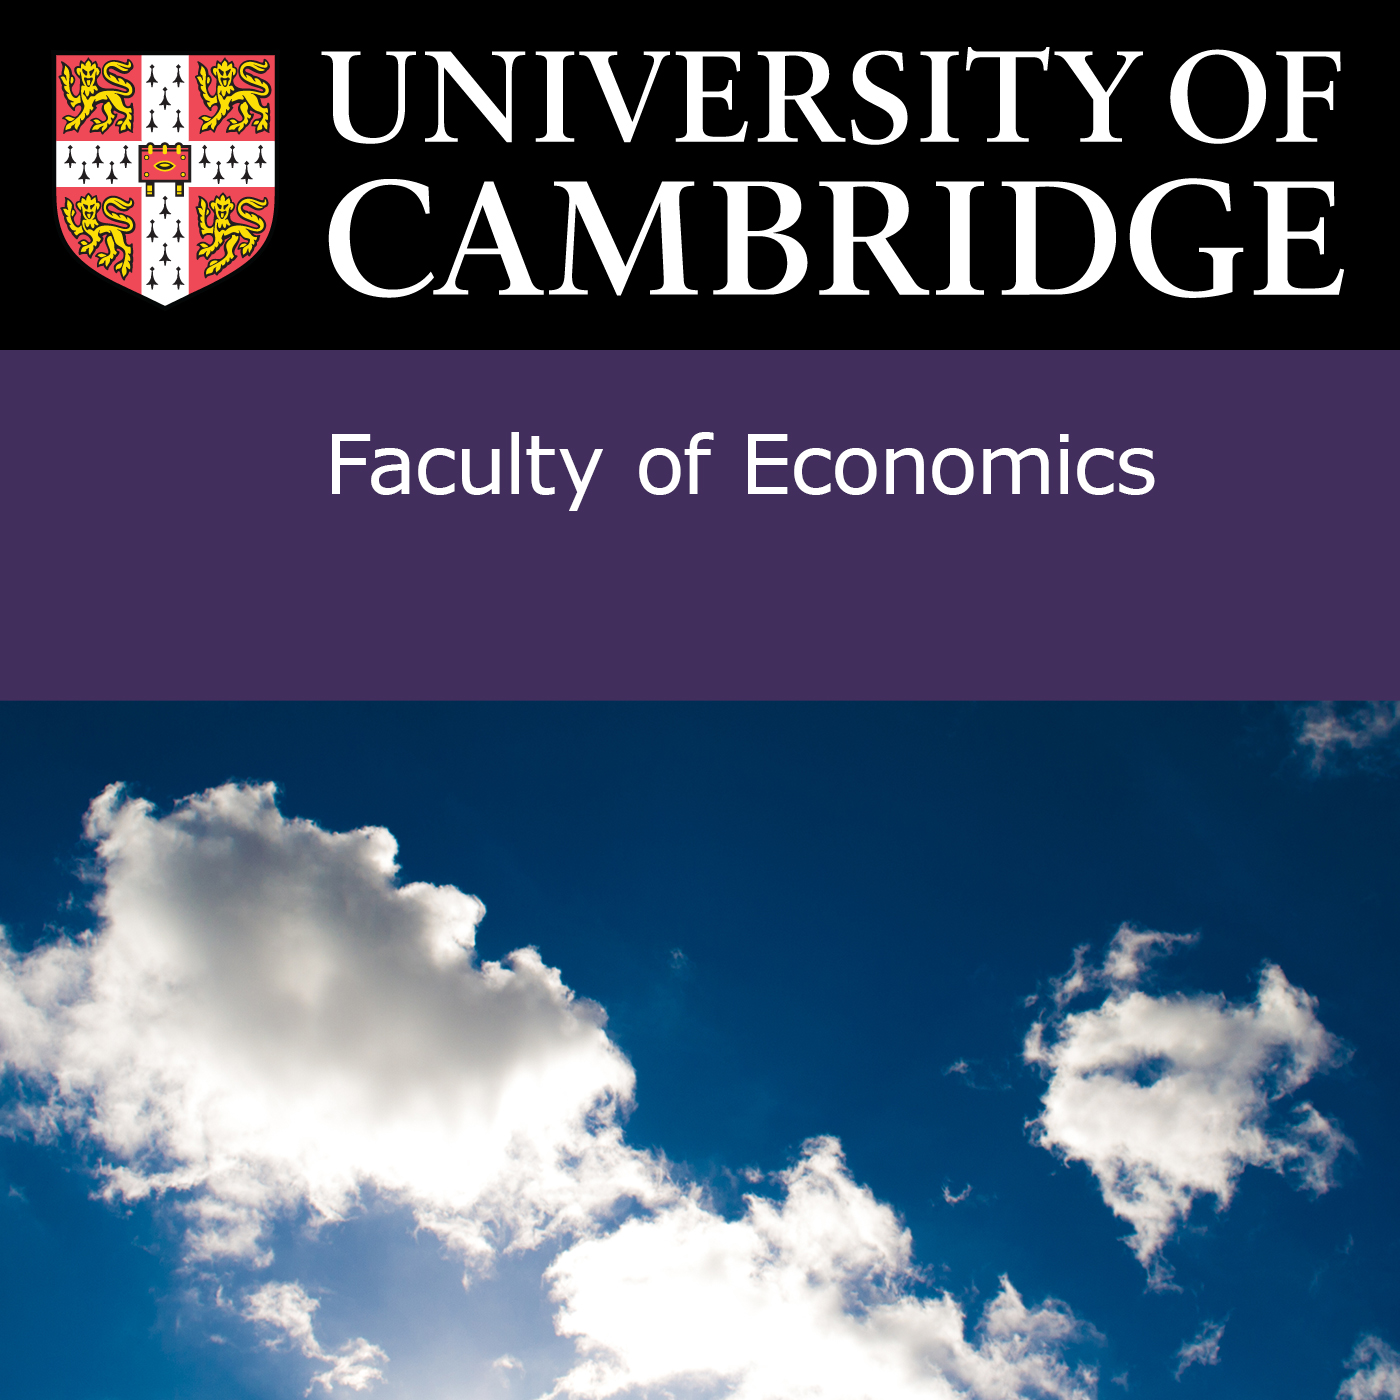 Faculty of Economics's image